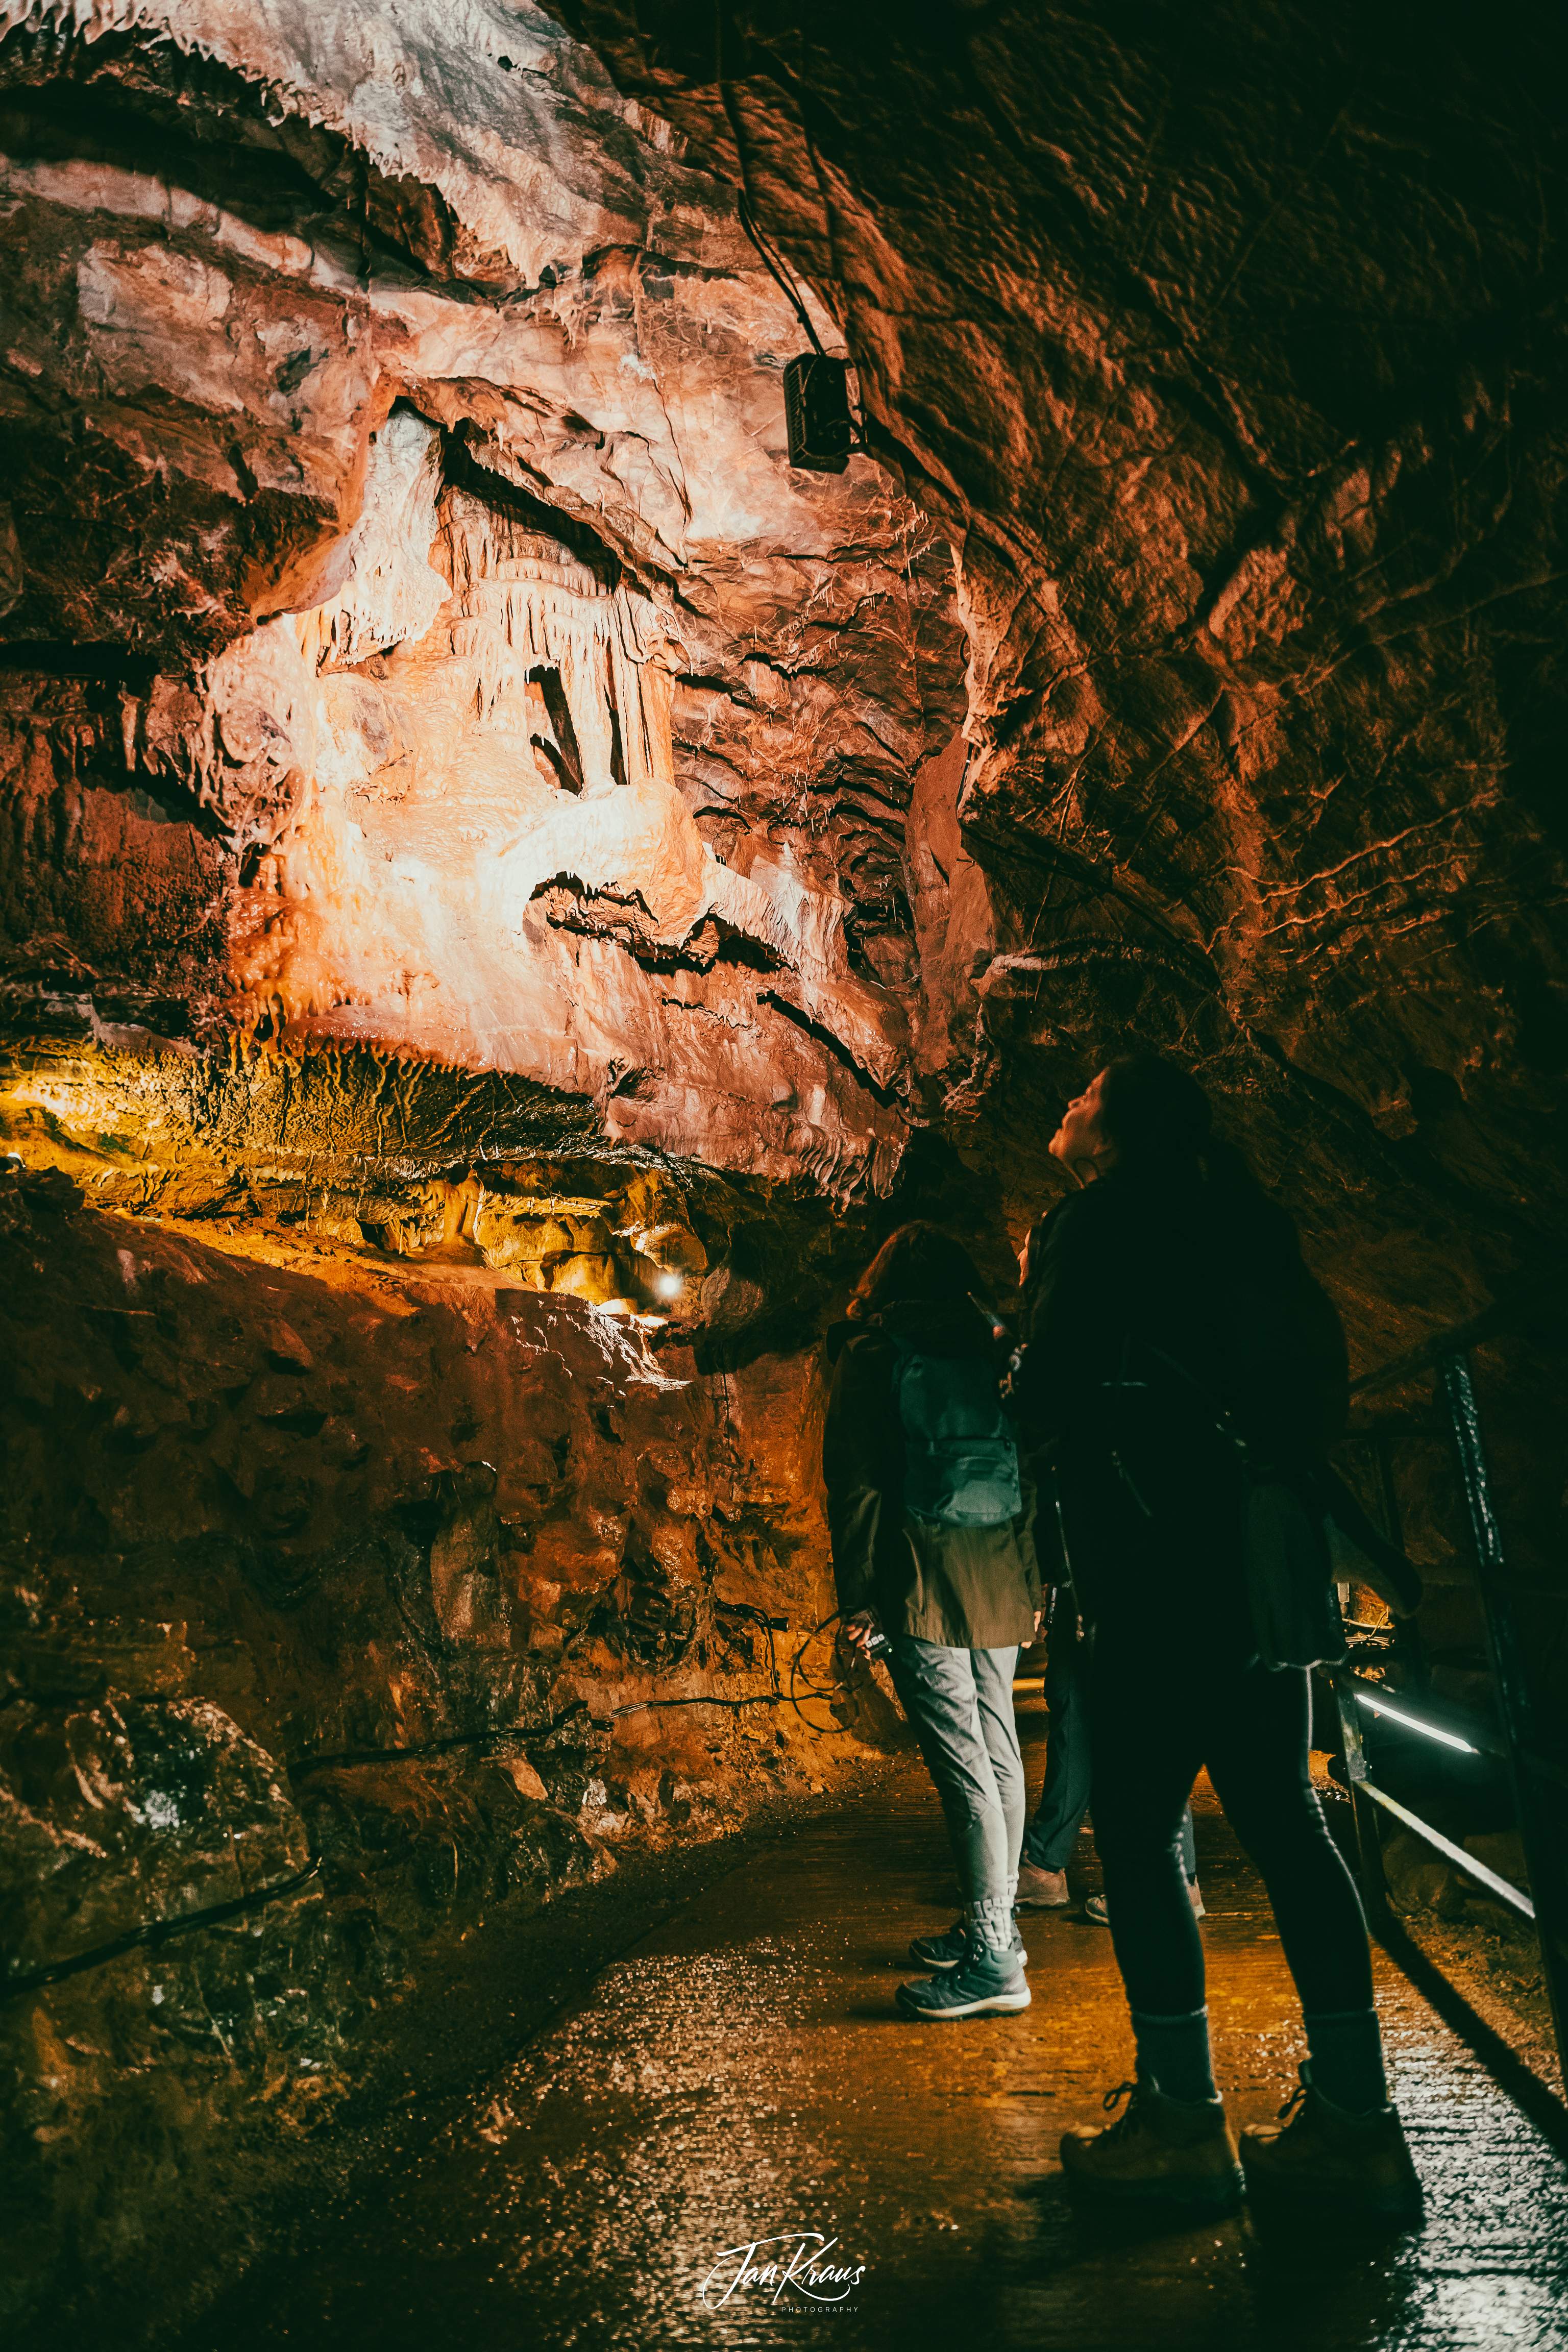 Gough's Cave at Cheddar Gorge, Somerset, England, UK